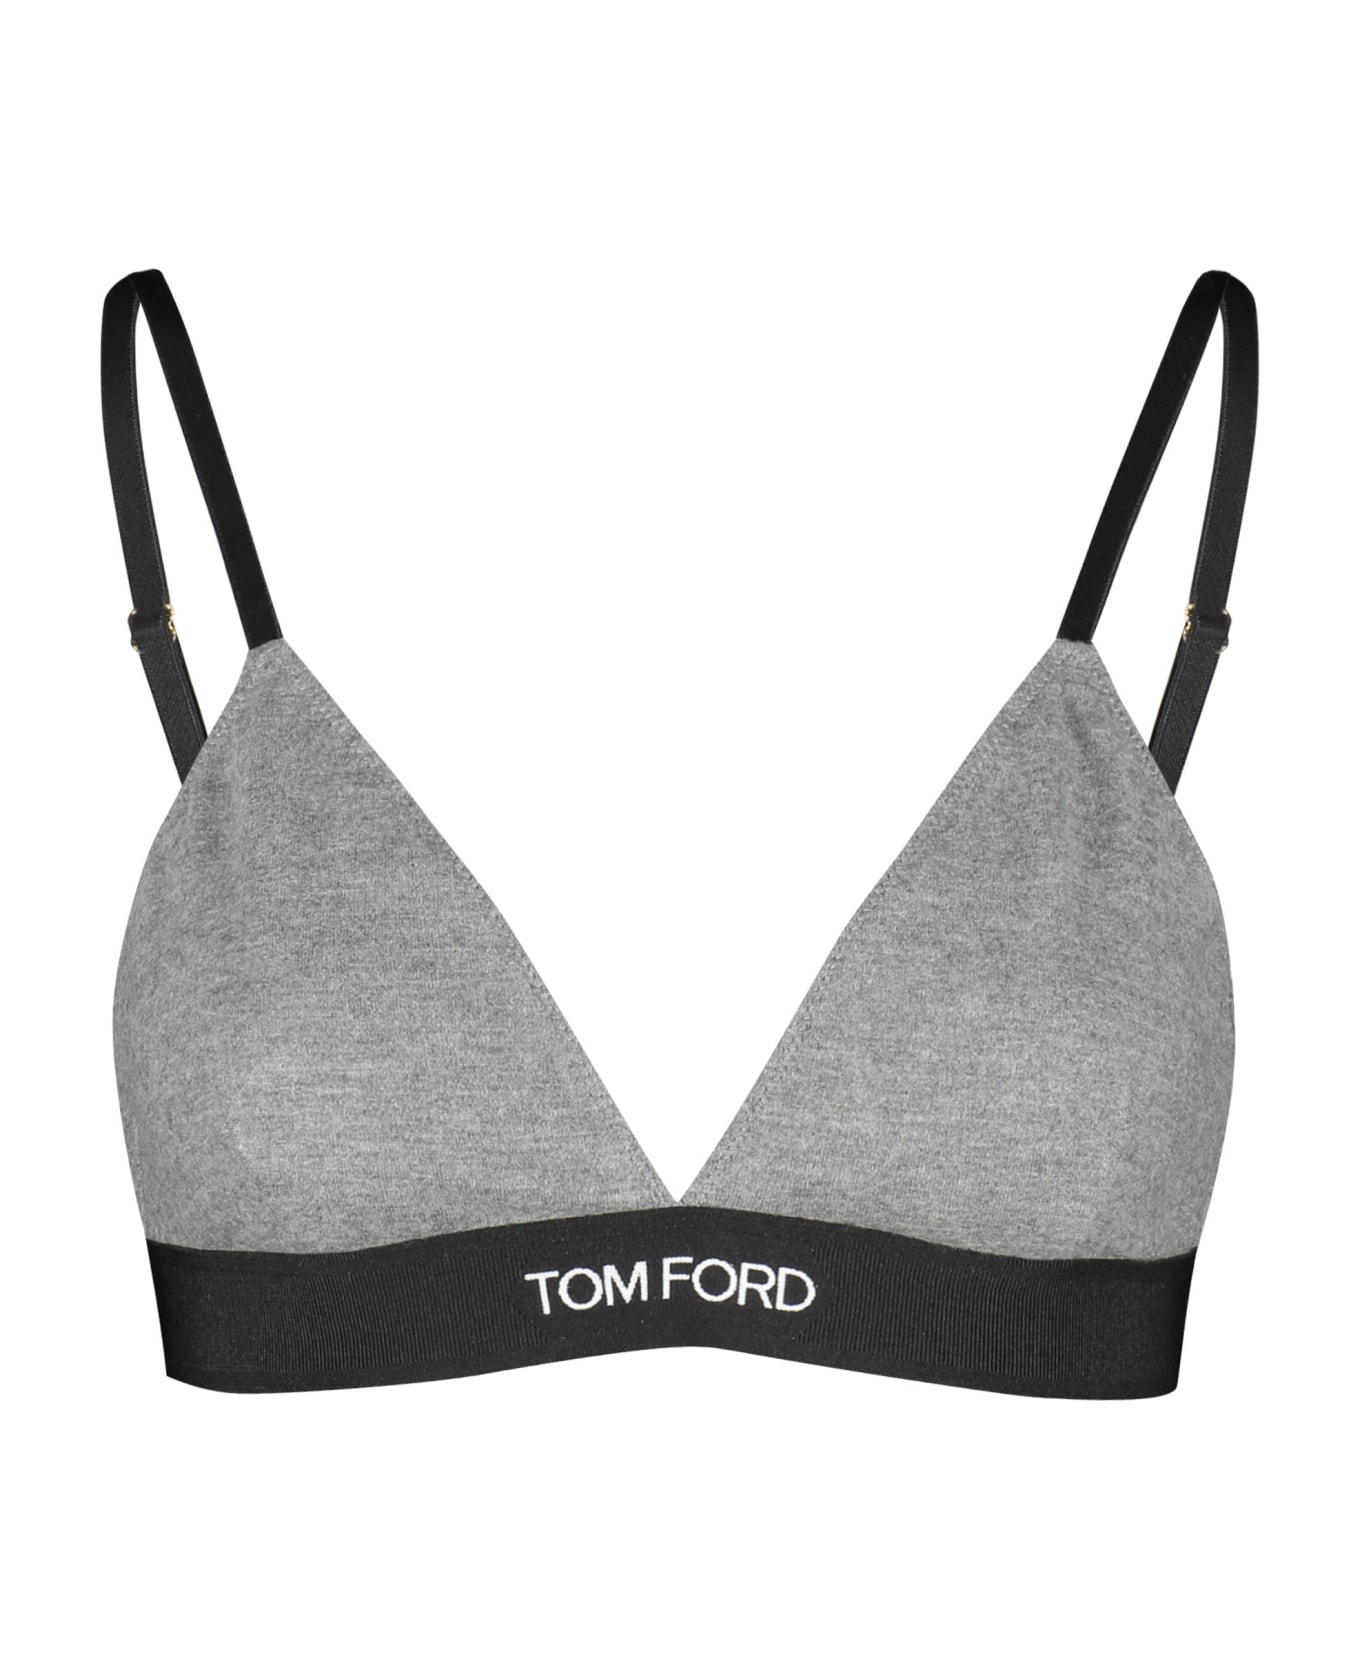 Tom Ford Triangle Bra - grey